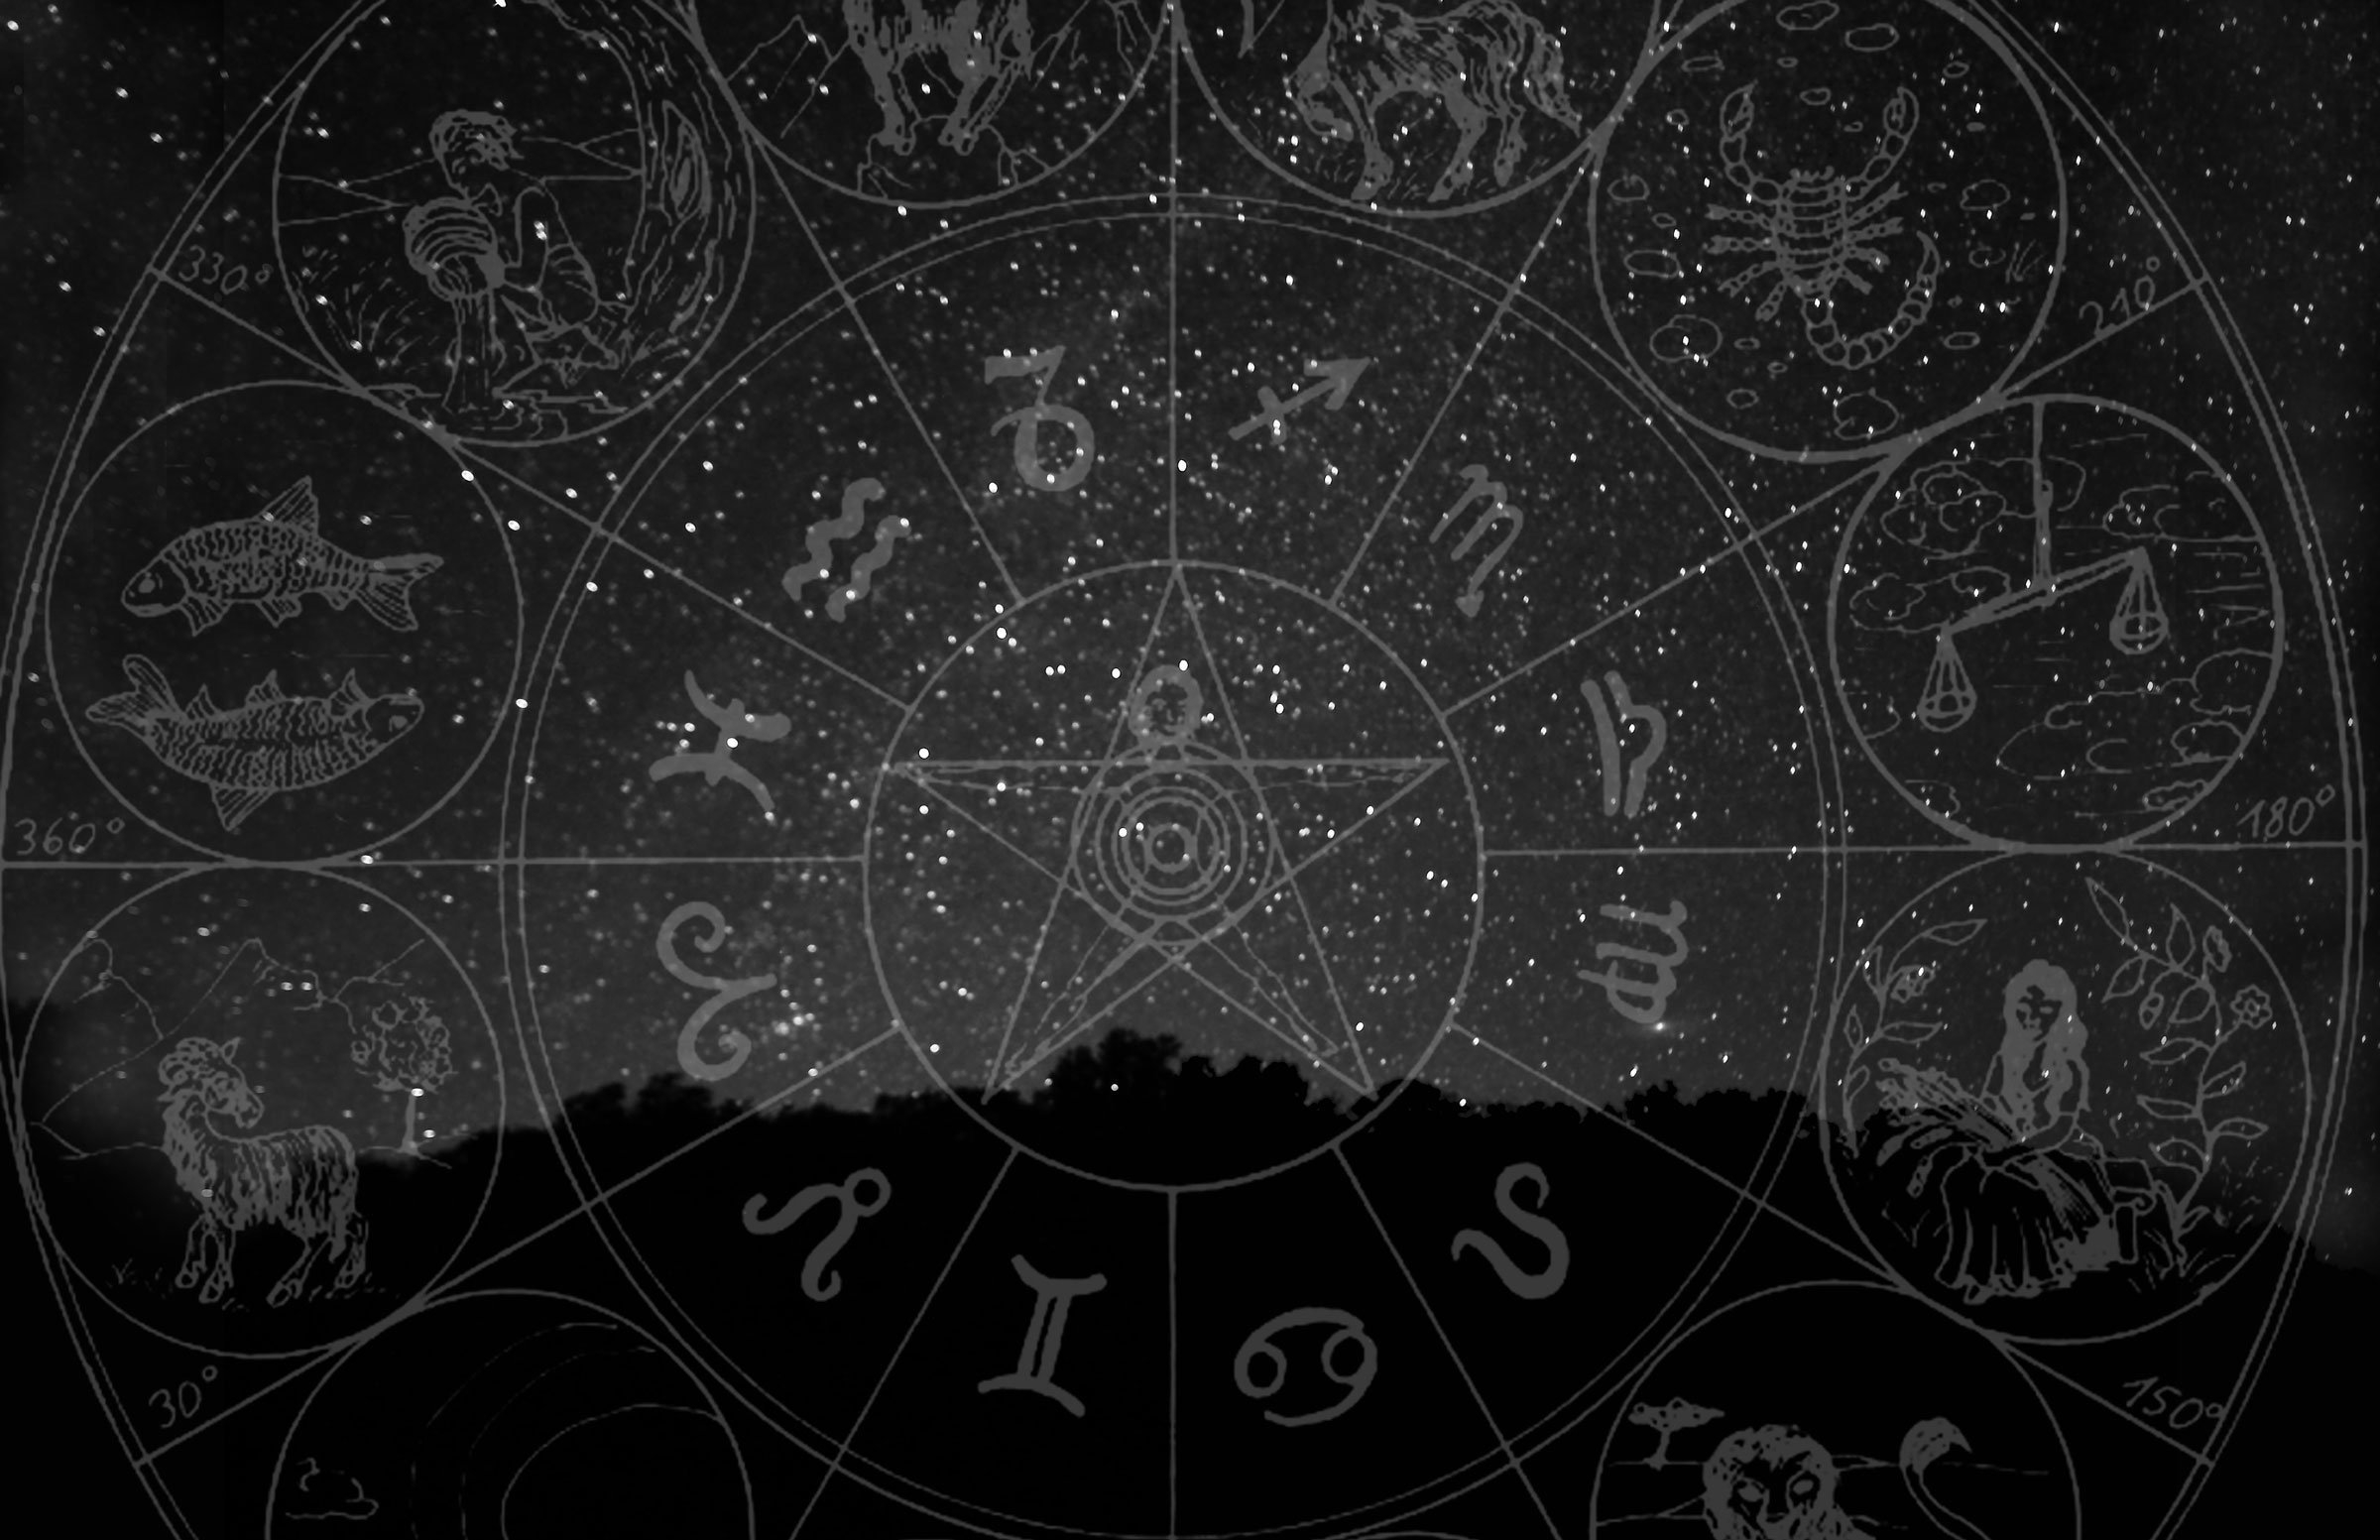 Zodiac 3. Астрология фон. Астрологический фон. Знаки зодиака фон. Фон для астролога.